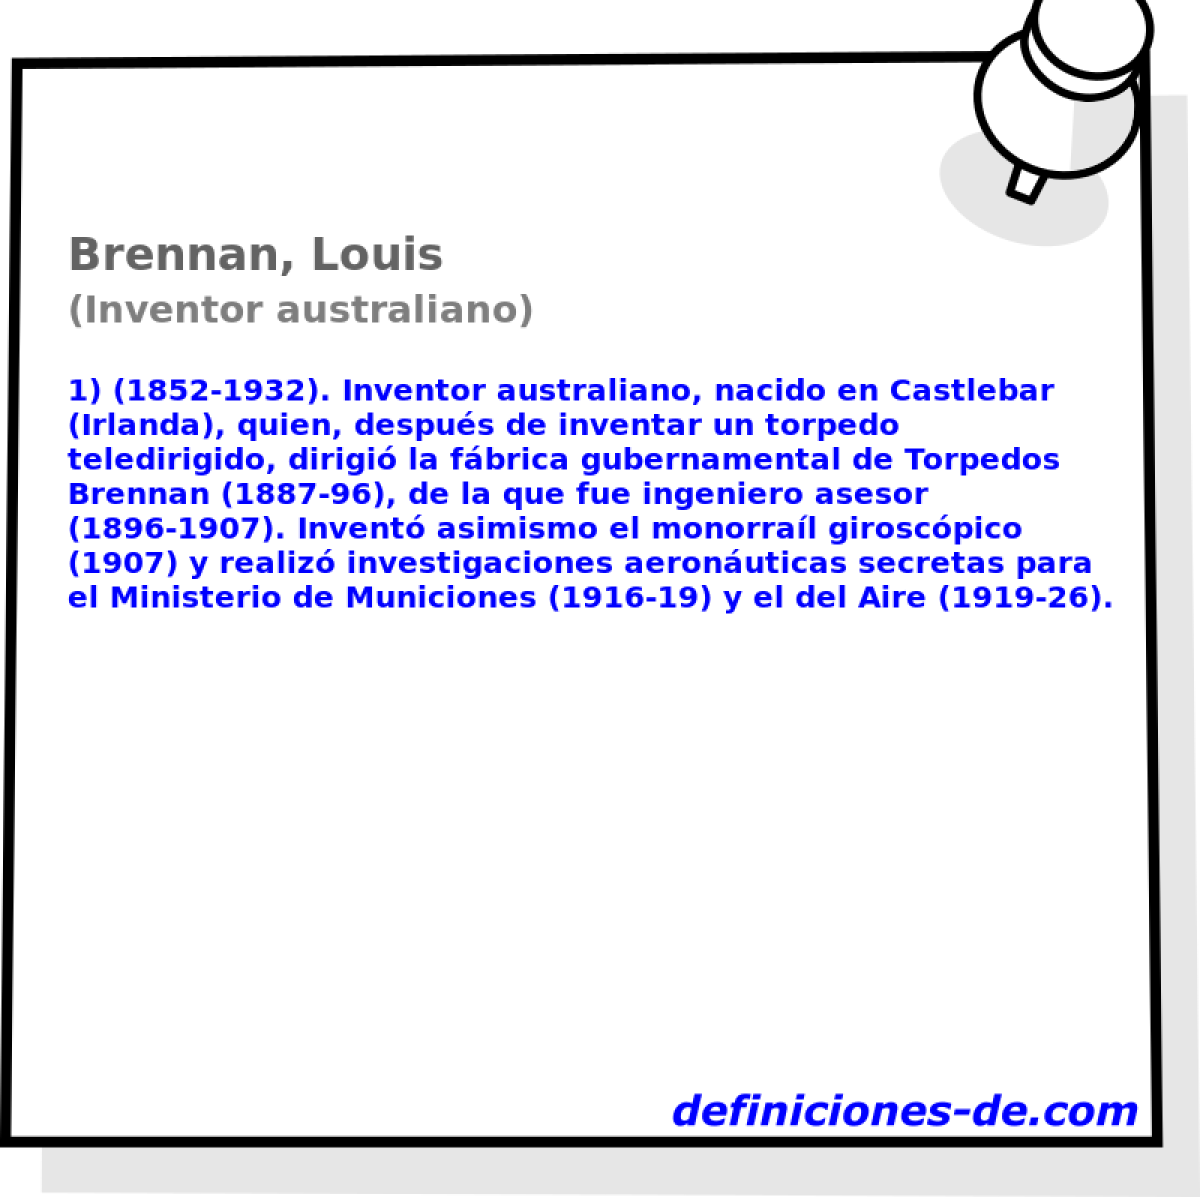 Brennan, Louis (Inventor australiano)